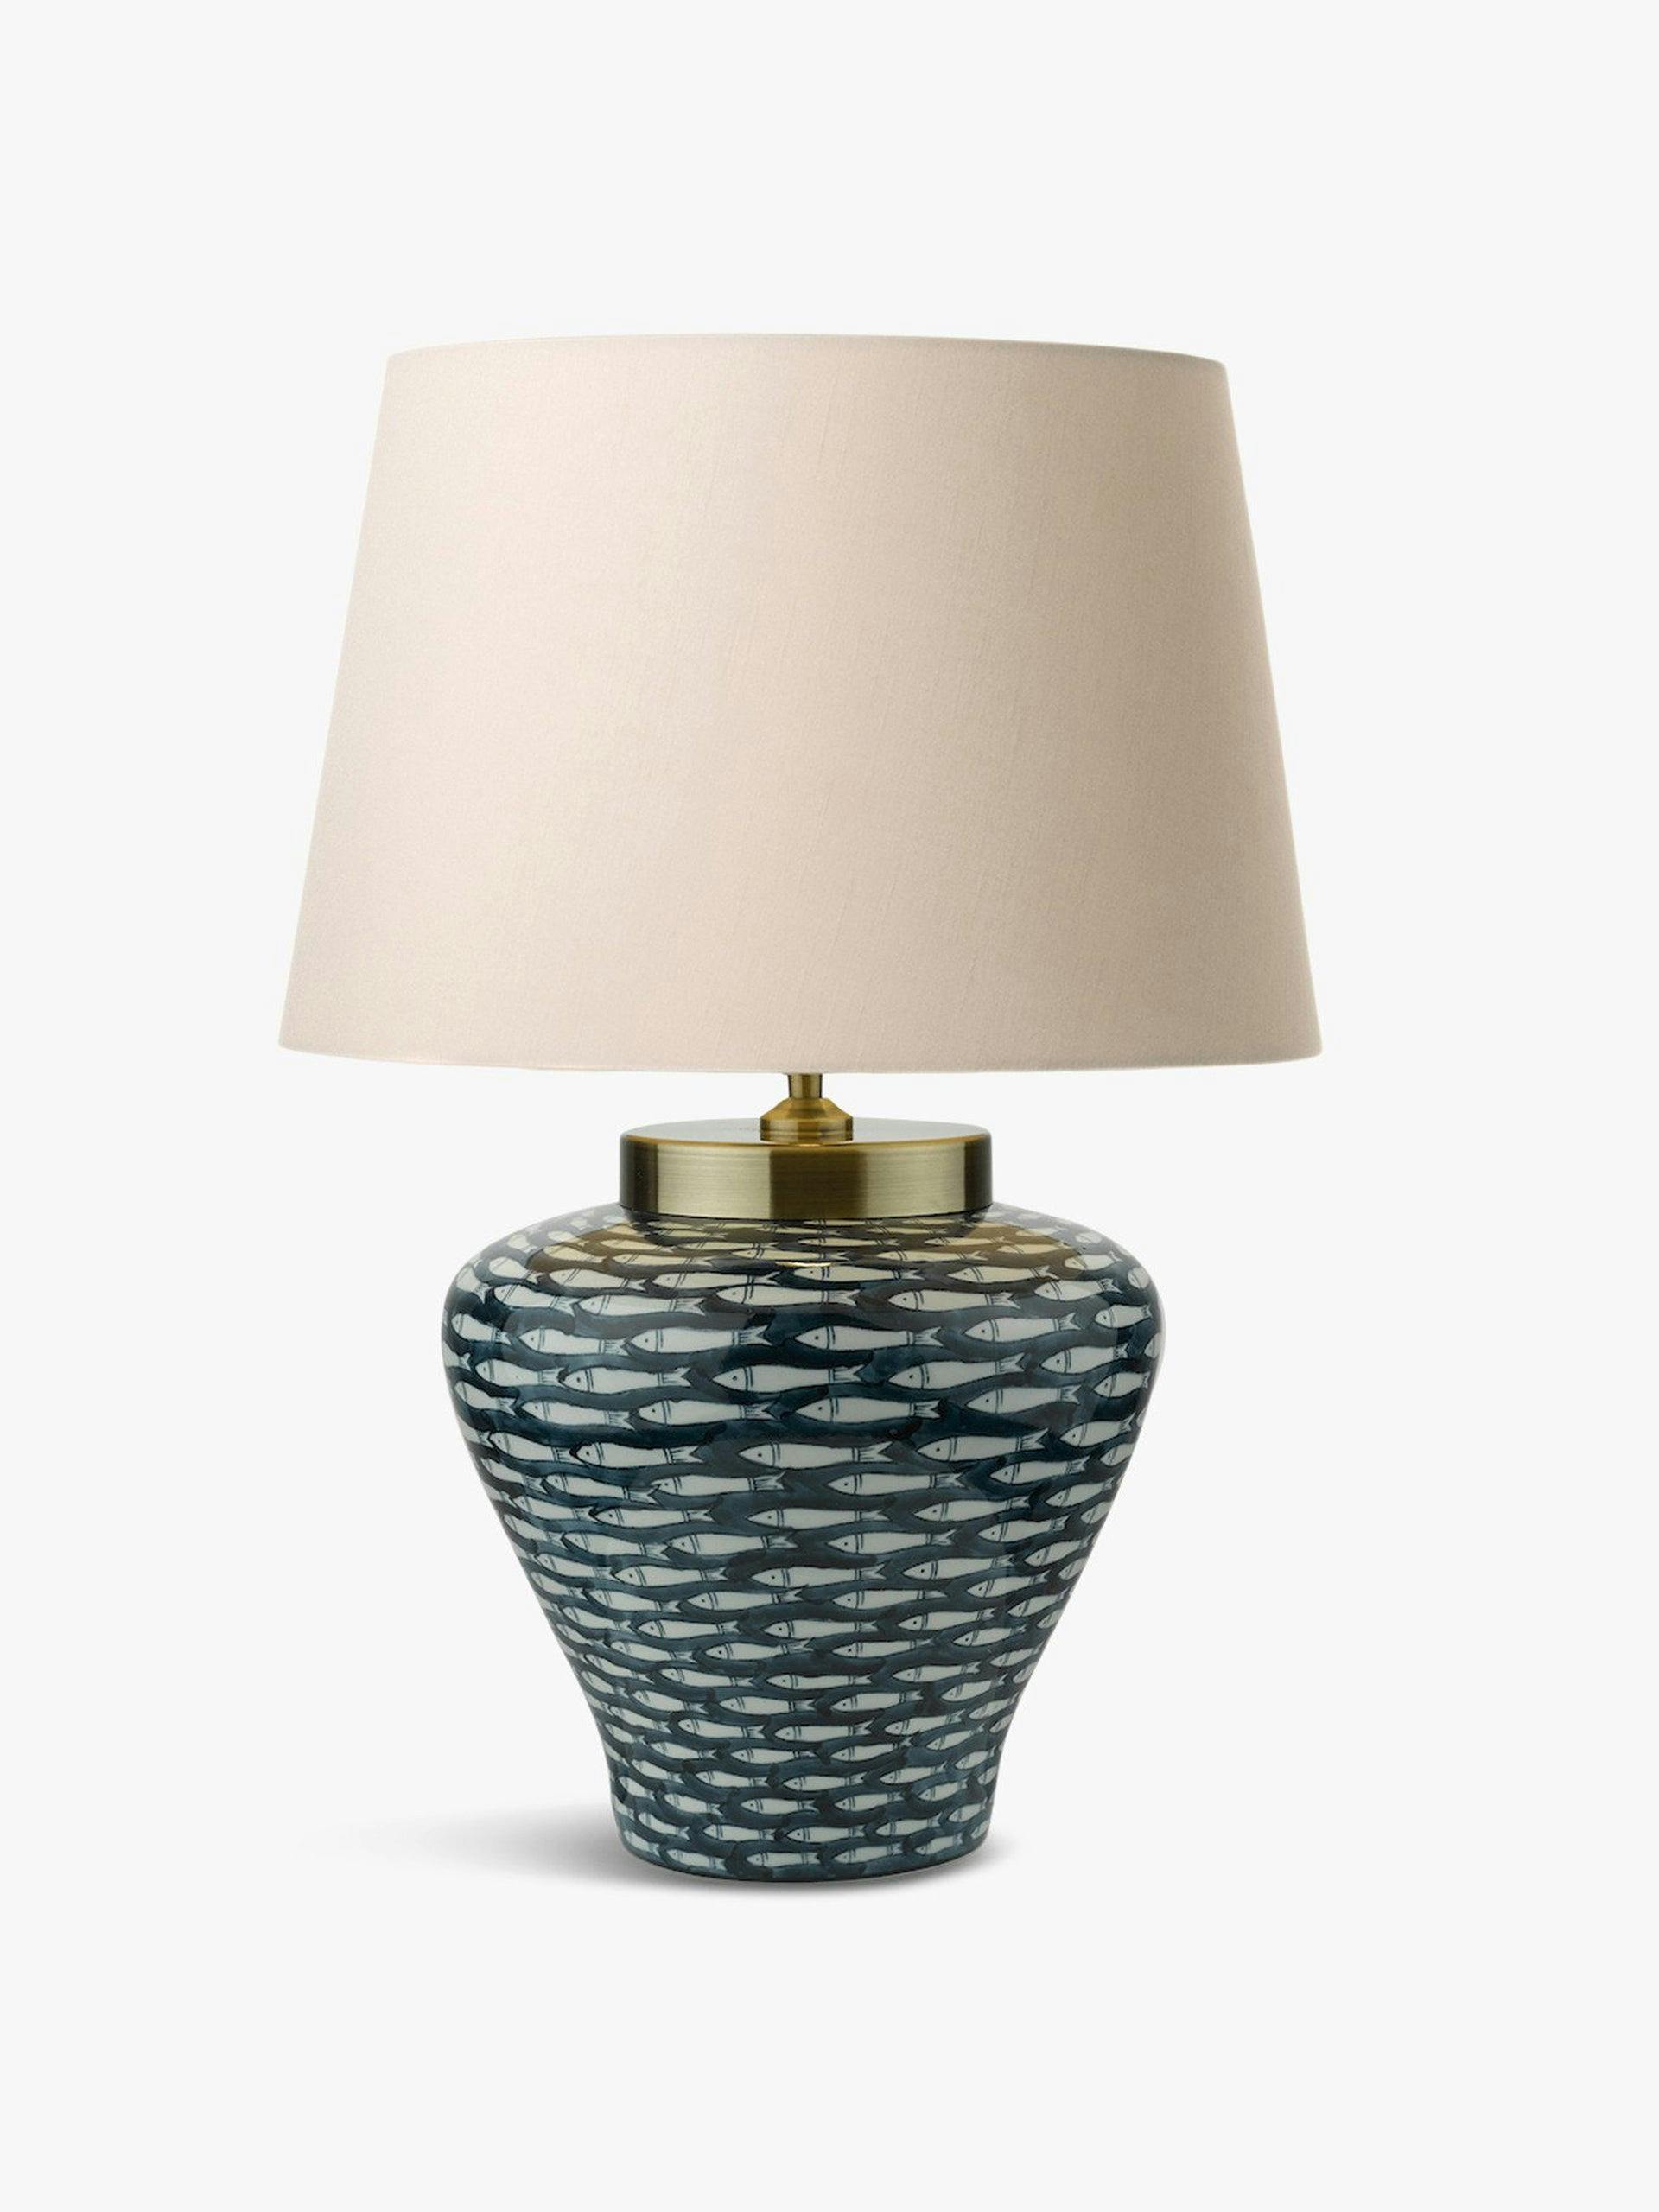 Porcelain table lamp base